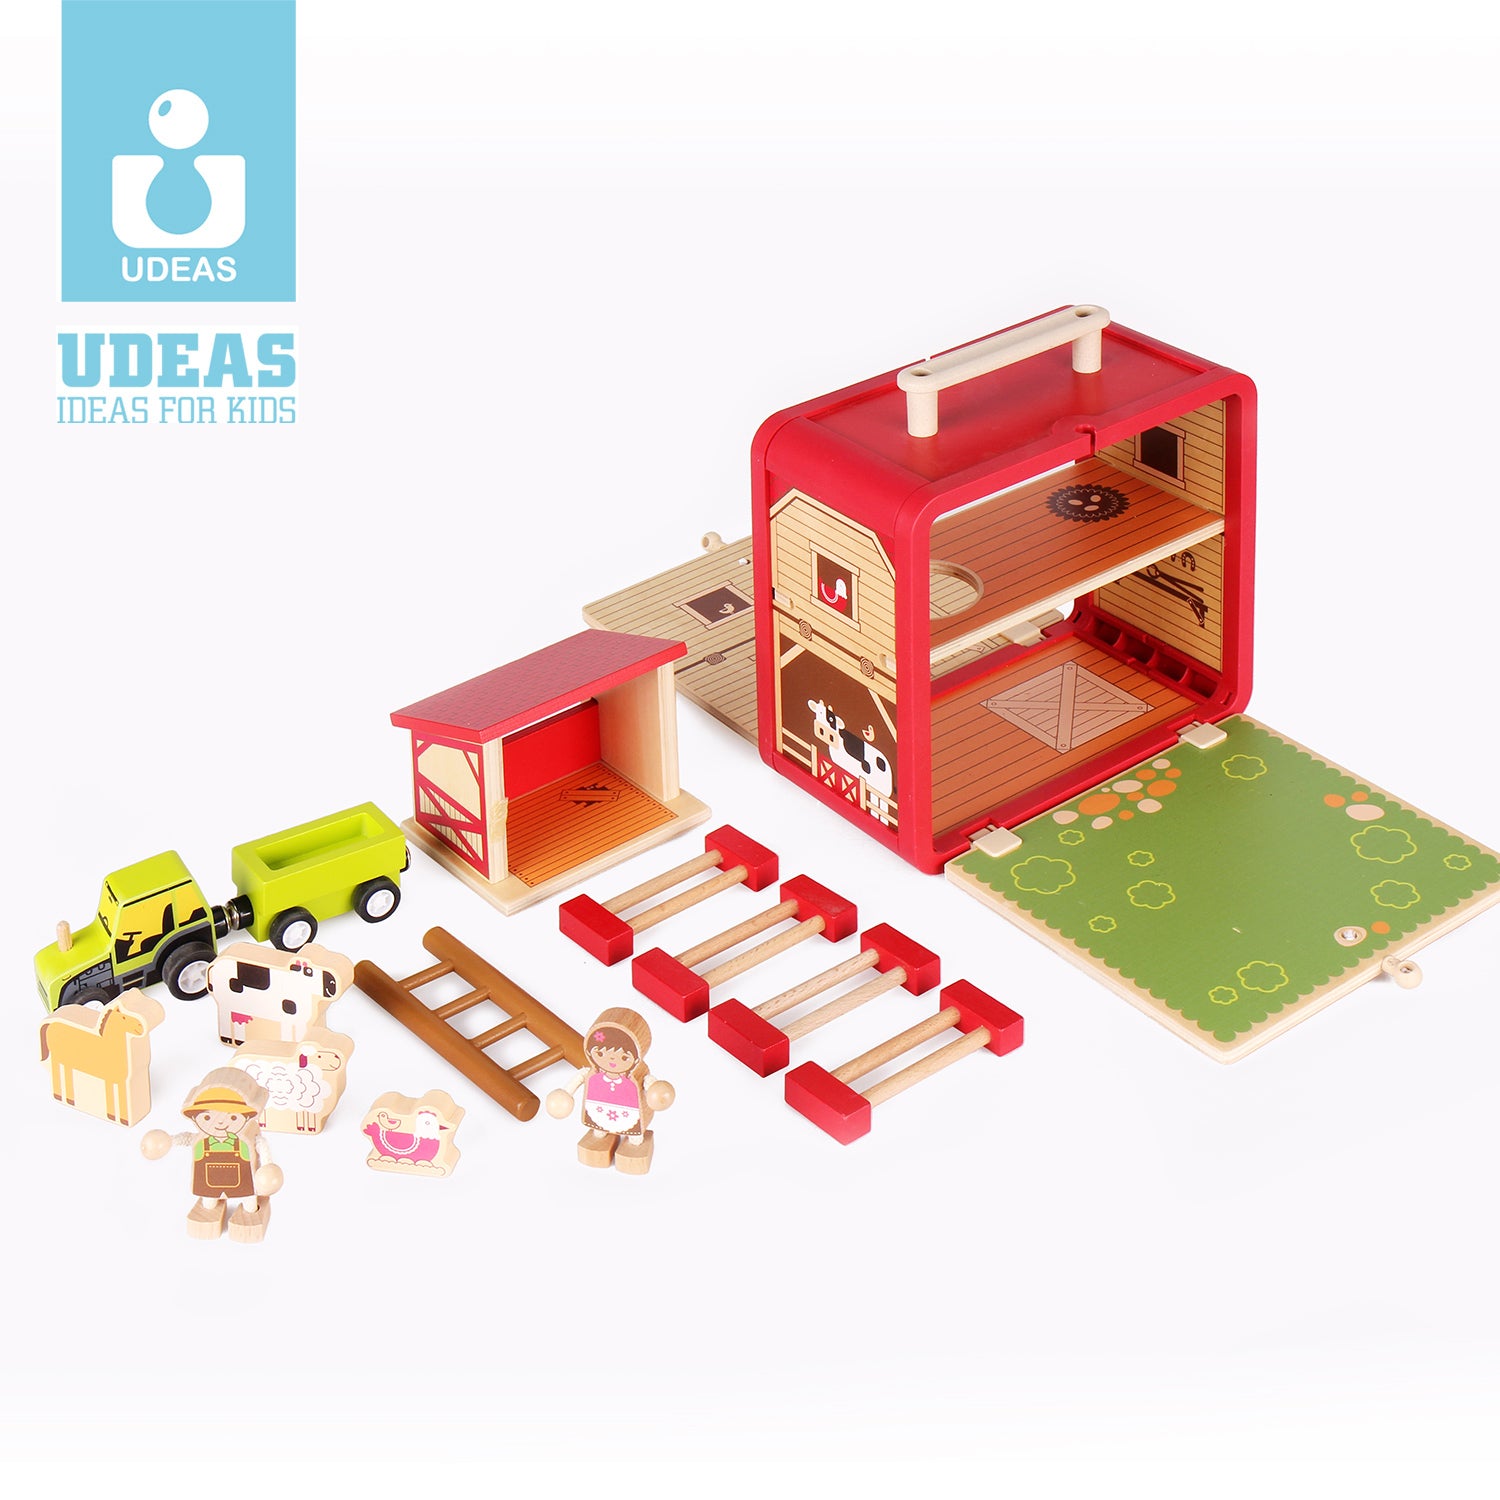 Baby Prime - Udeas Story Box Set Barn house (4828451700770)